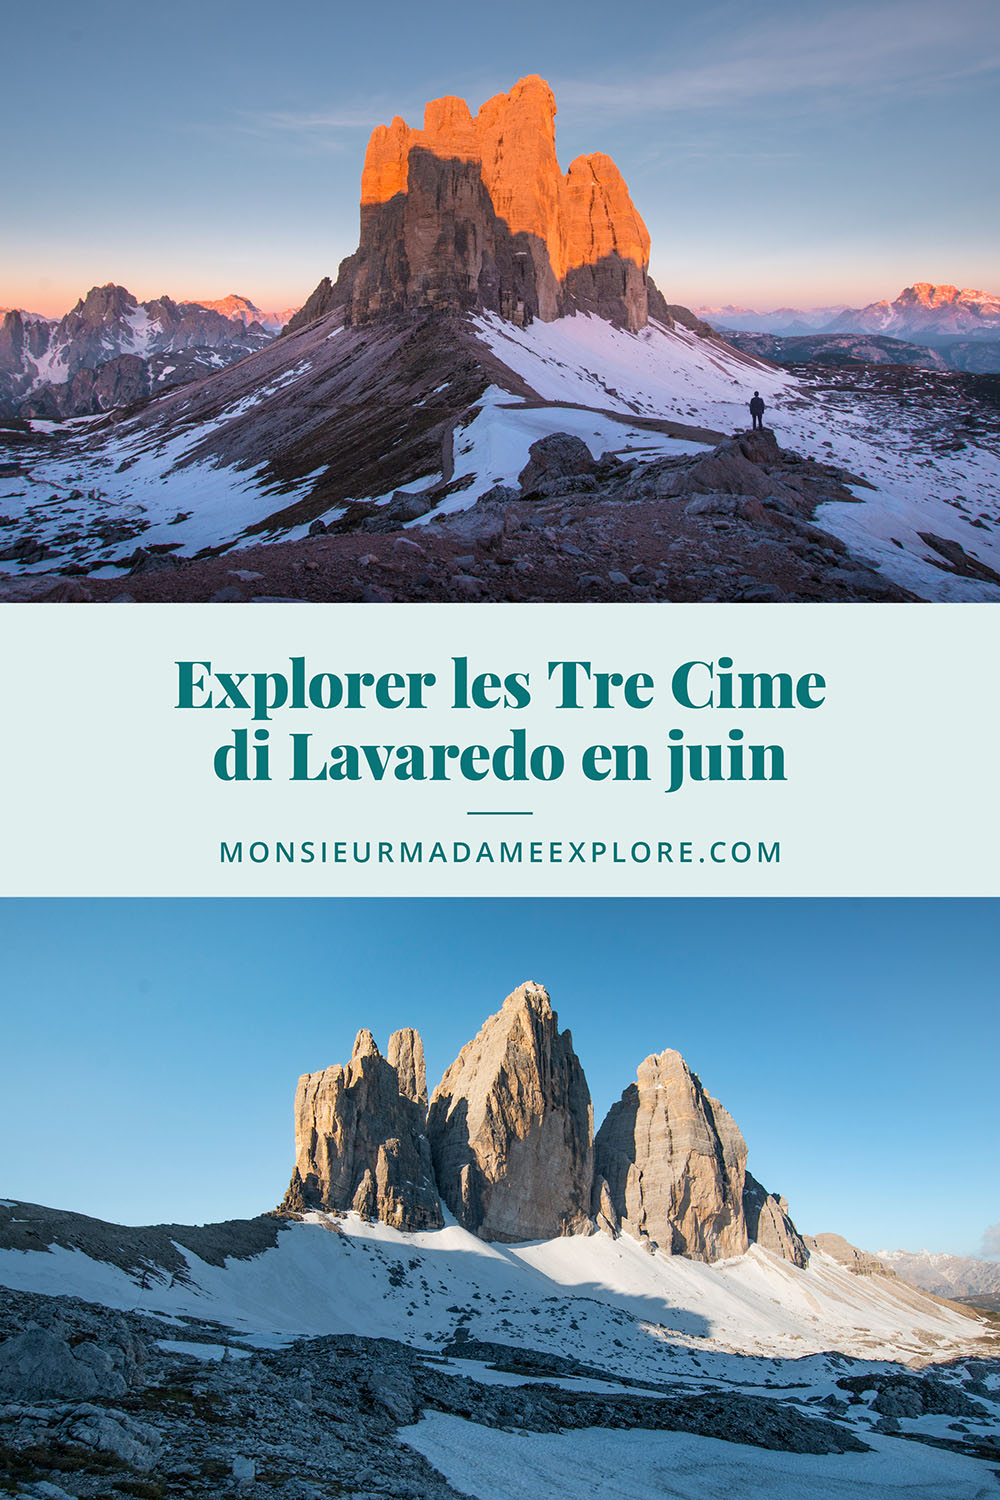 Explorer les Tre Cime di Lavaredo en juin, Monsieur+Madame Explore, Blogue de voyage, Dolomites, Italie / Visiting the Tre Cime di Lavaredo in June, Dolomites, Italy